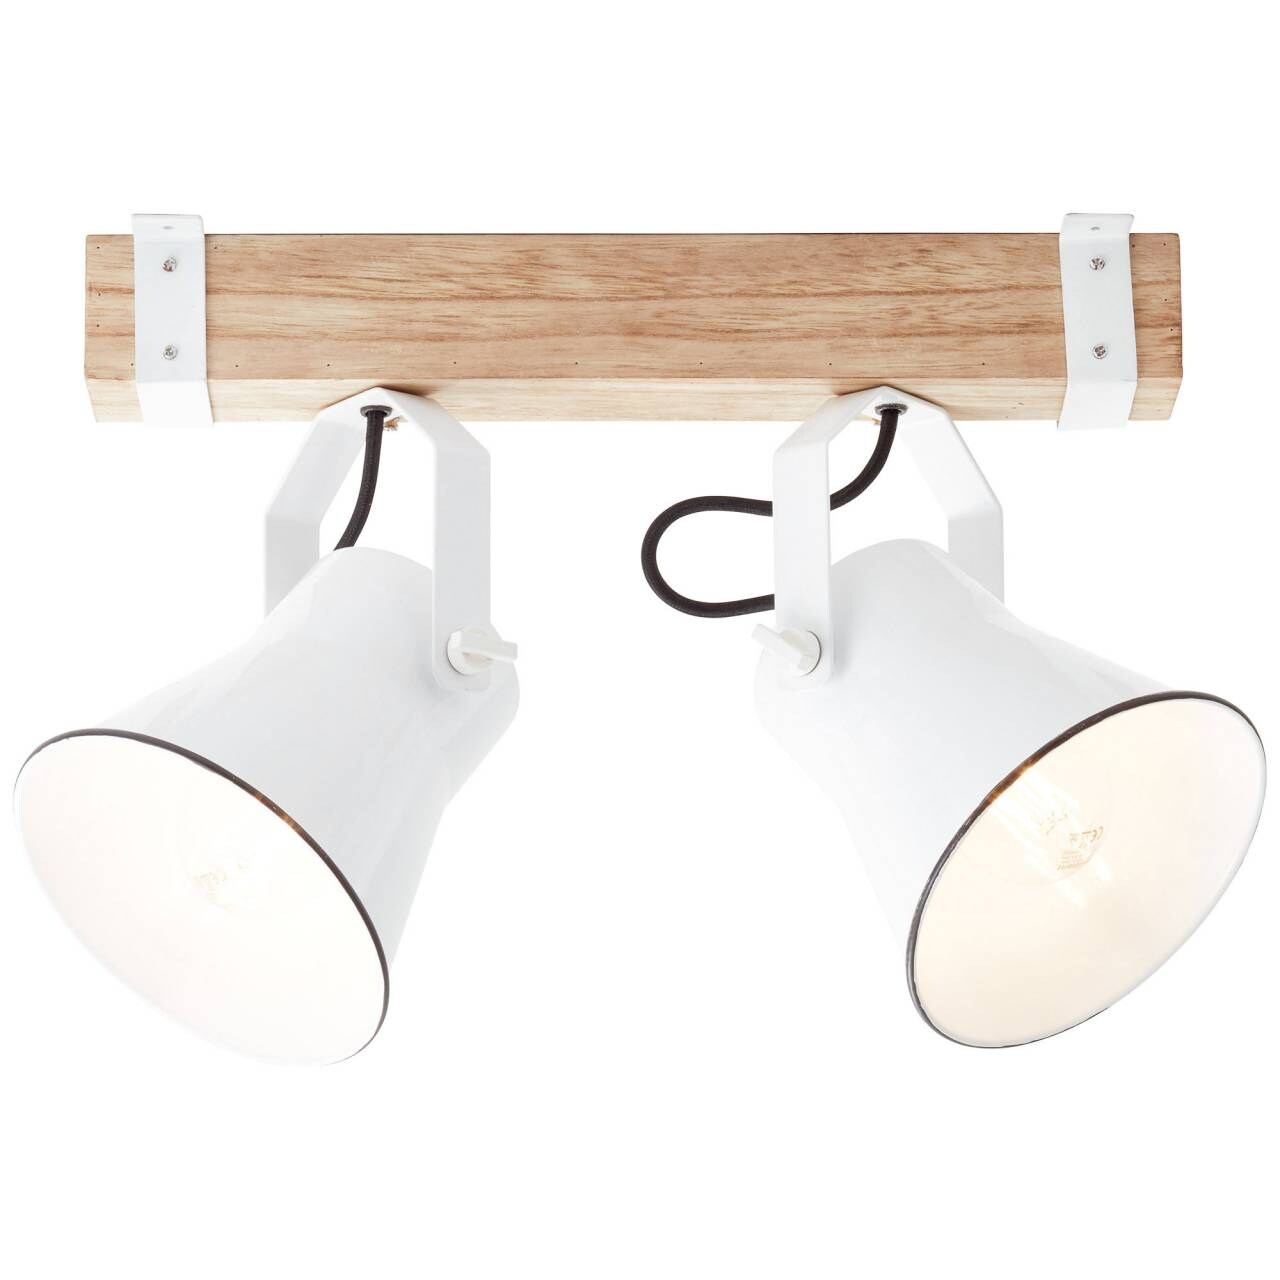 BRILLIANT Lampe Plow Spotbalken 2flg weiß/holz hell   2x A60, E27, 10W, geeignet für Normallampen (nicht enthalten)   Kö